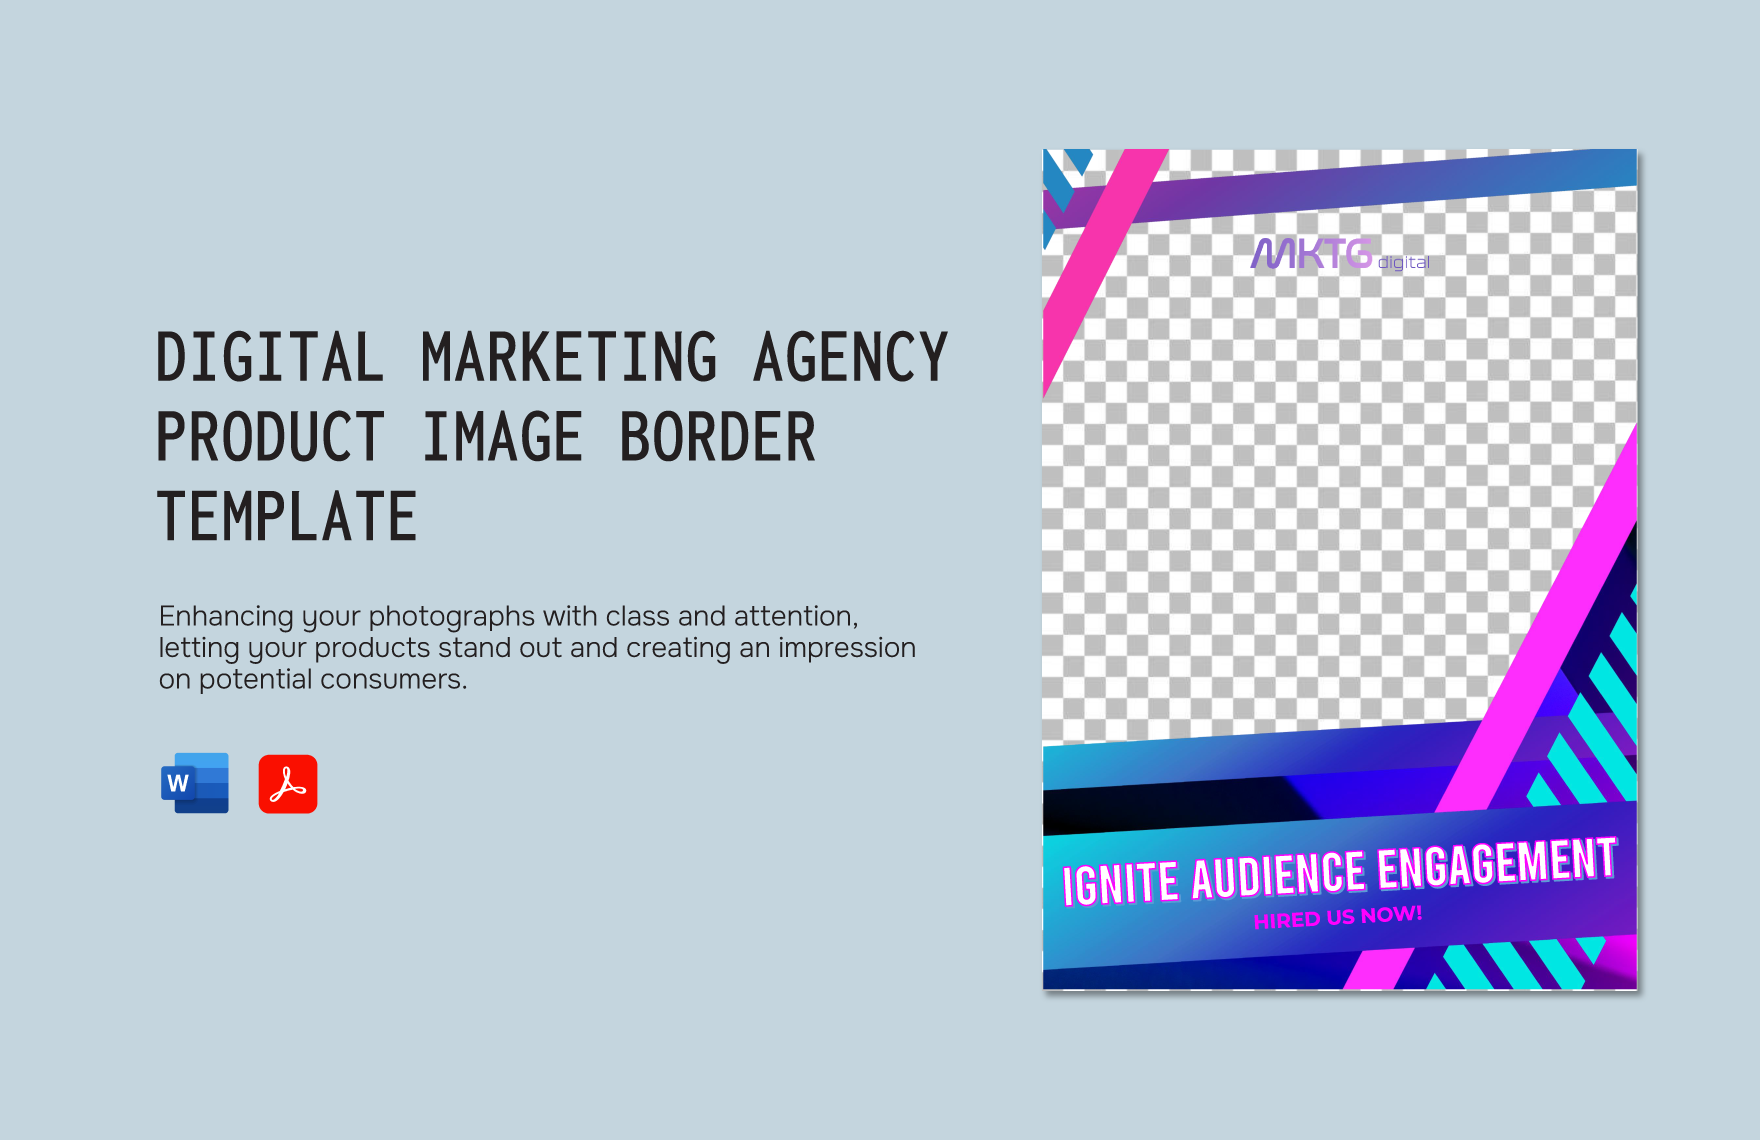 Digital Marketing Agency Product Image Border Template